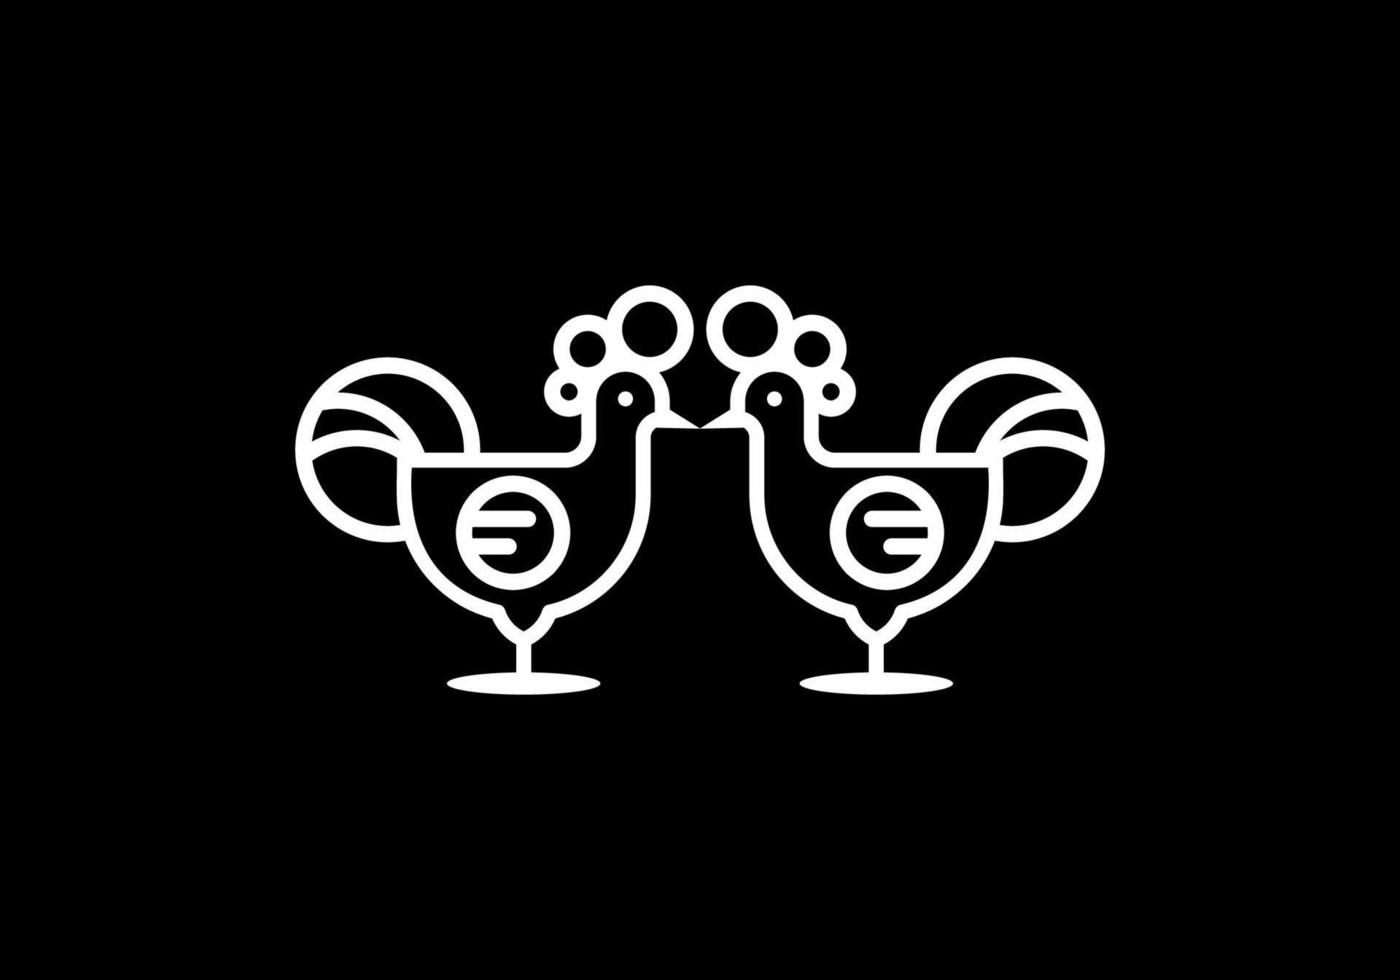 tweeling kip vector logo